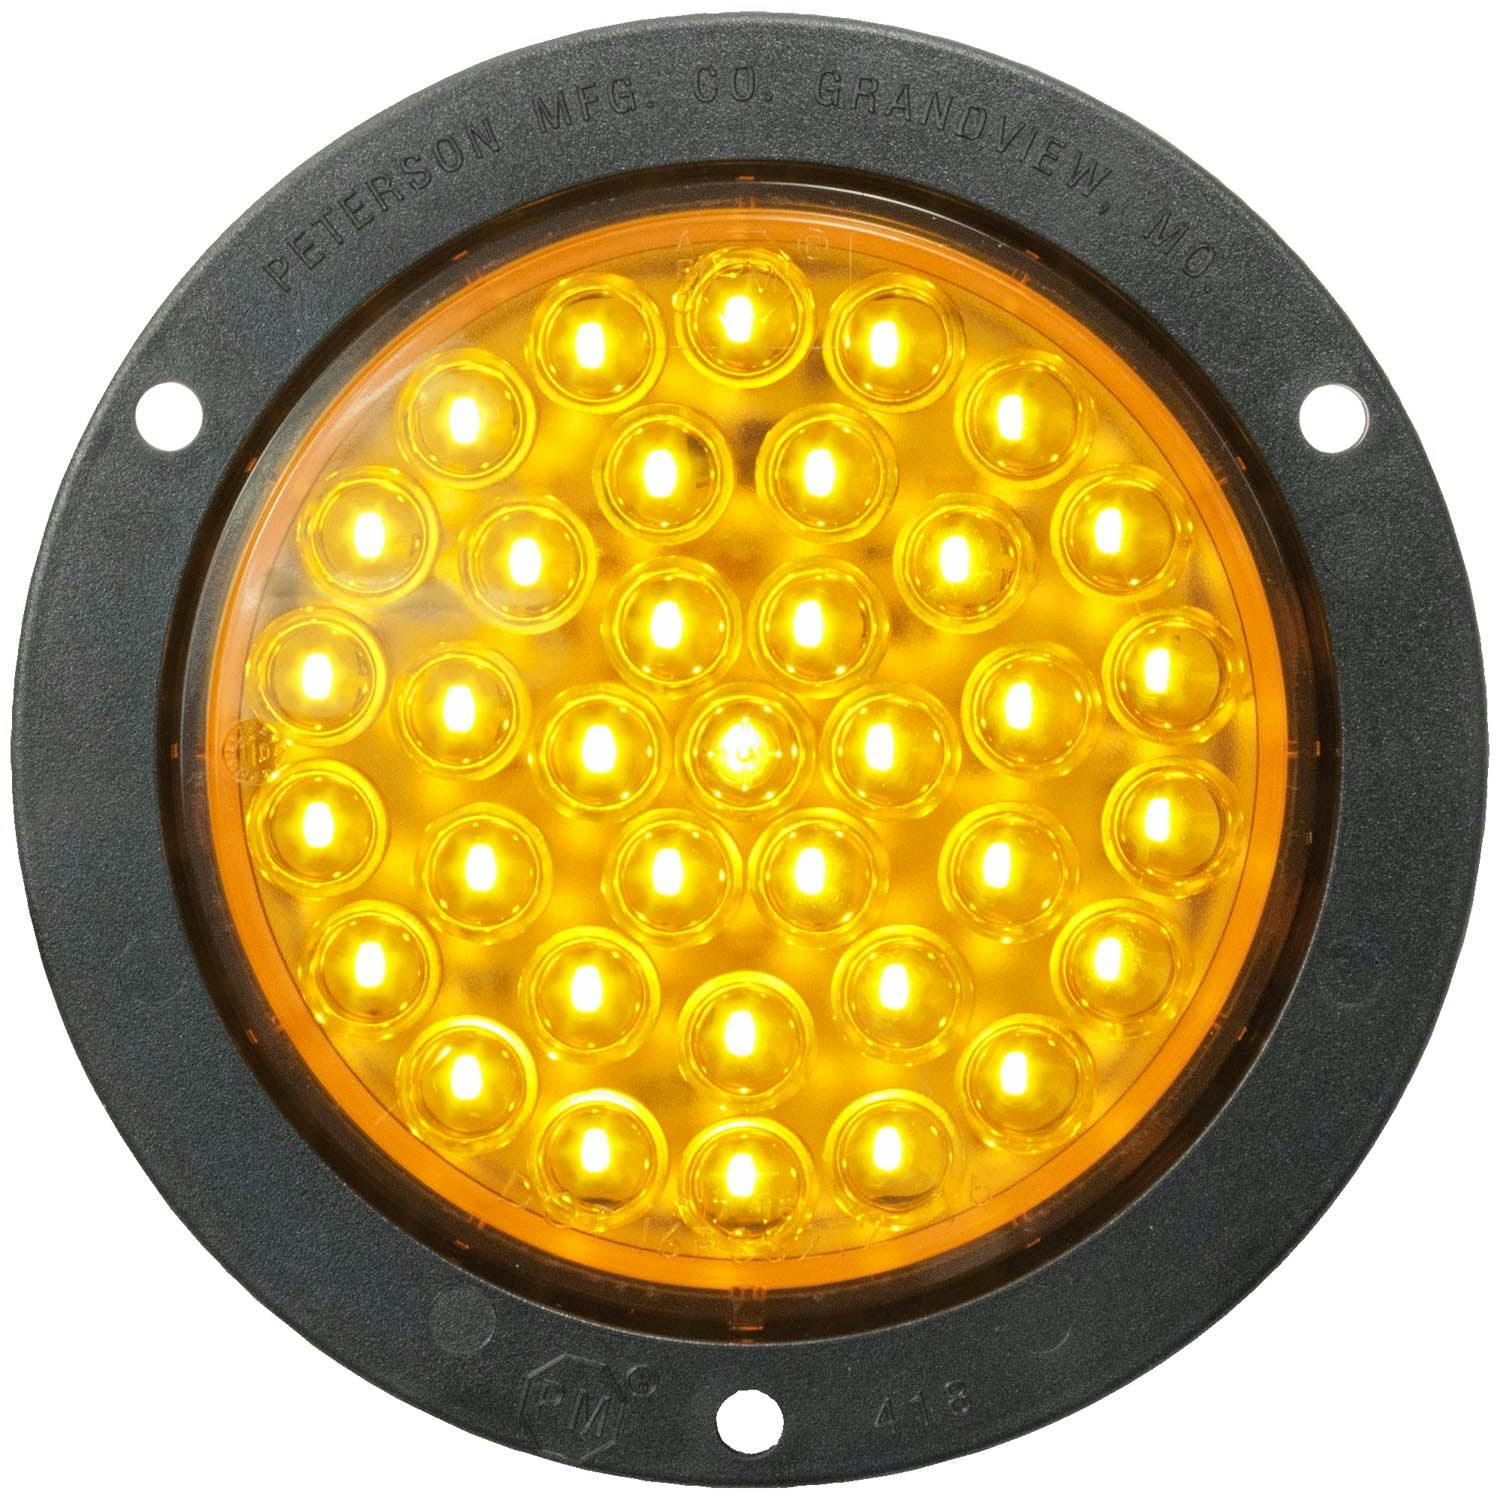 Piranha® LED 4" Round Amber Rear Turn Signal Light, amber, 36 Diode, Flange Mount, W/ Hardwired PL3 Adapter Plug,, mfg pk (Pack of 50)